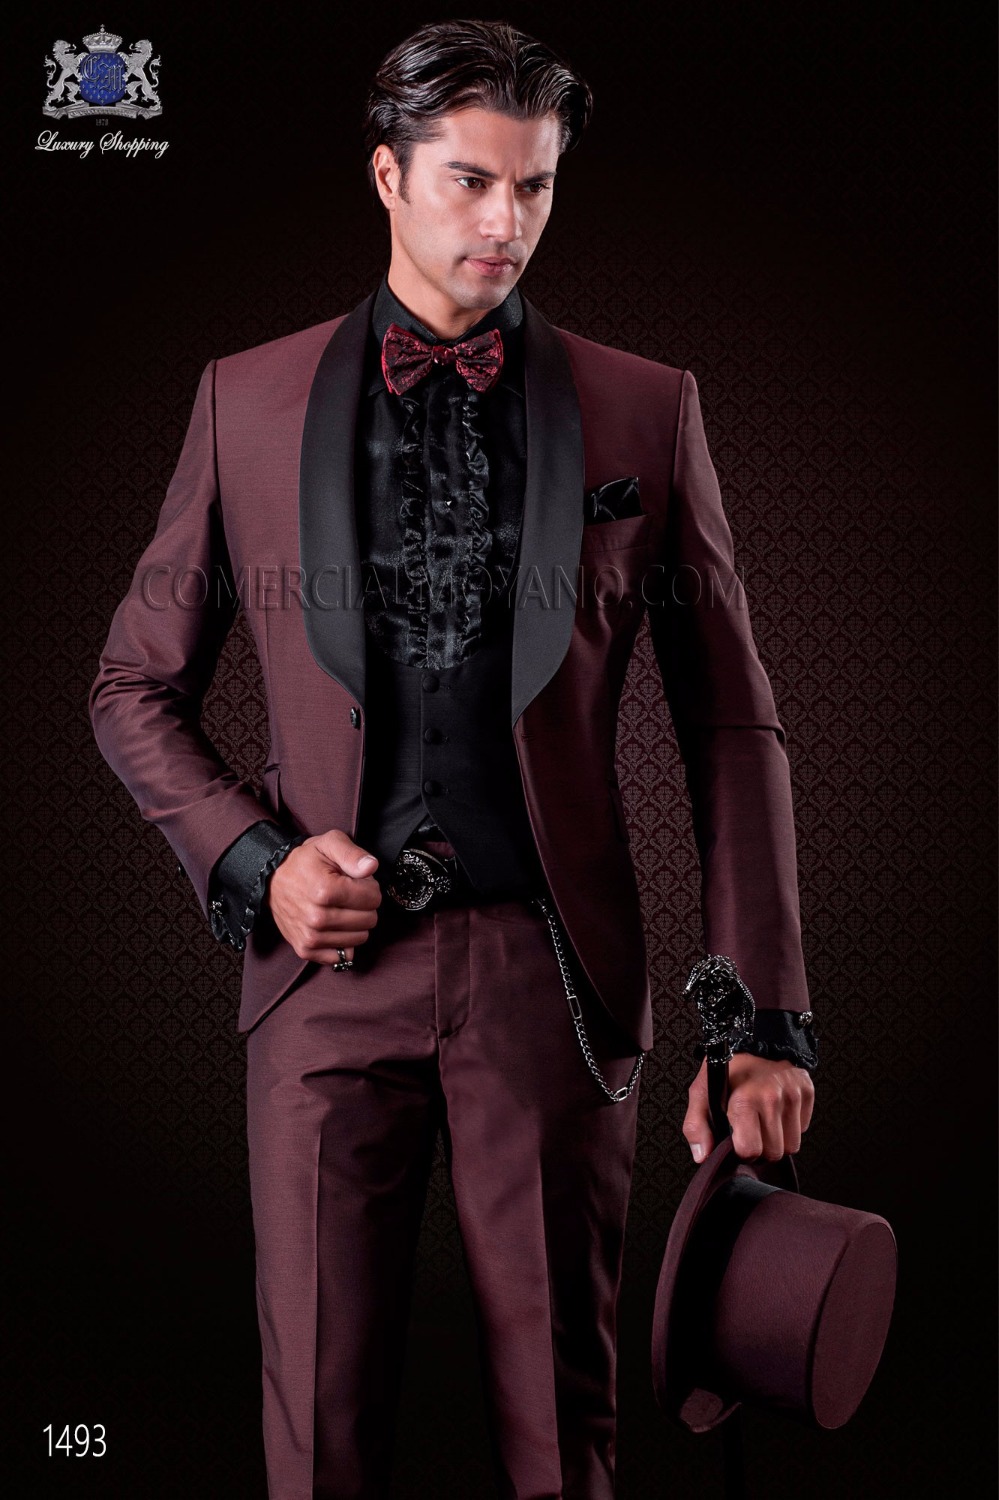 

Wholesale- Latest Coat Pant Designs Burgundy Shawl Lapel Men Suit Slim Fit 3 Piece Italian Tuxedo Custom Stylish Suit Terno Masculino, Same as image